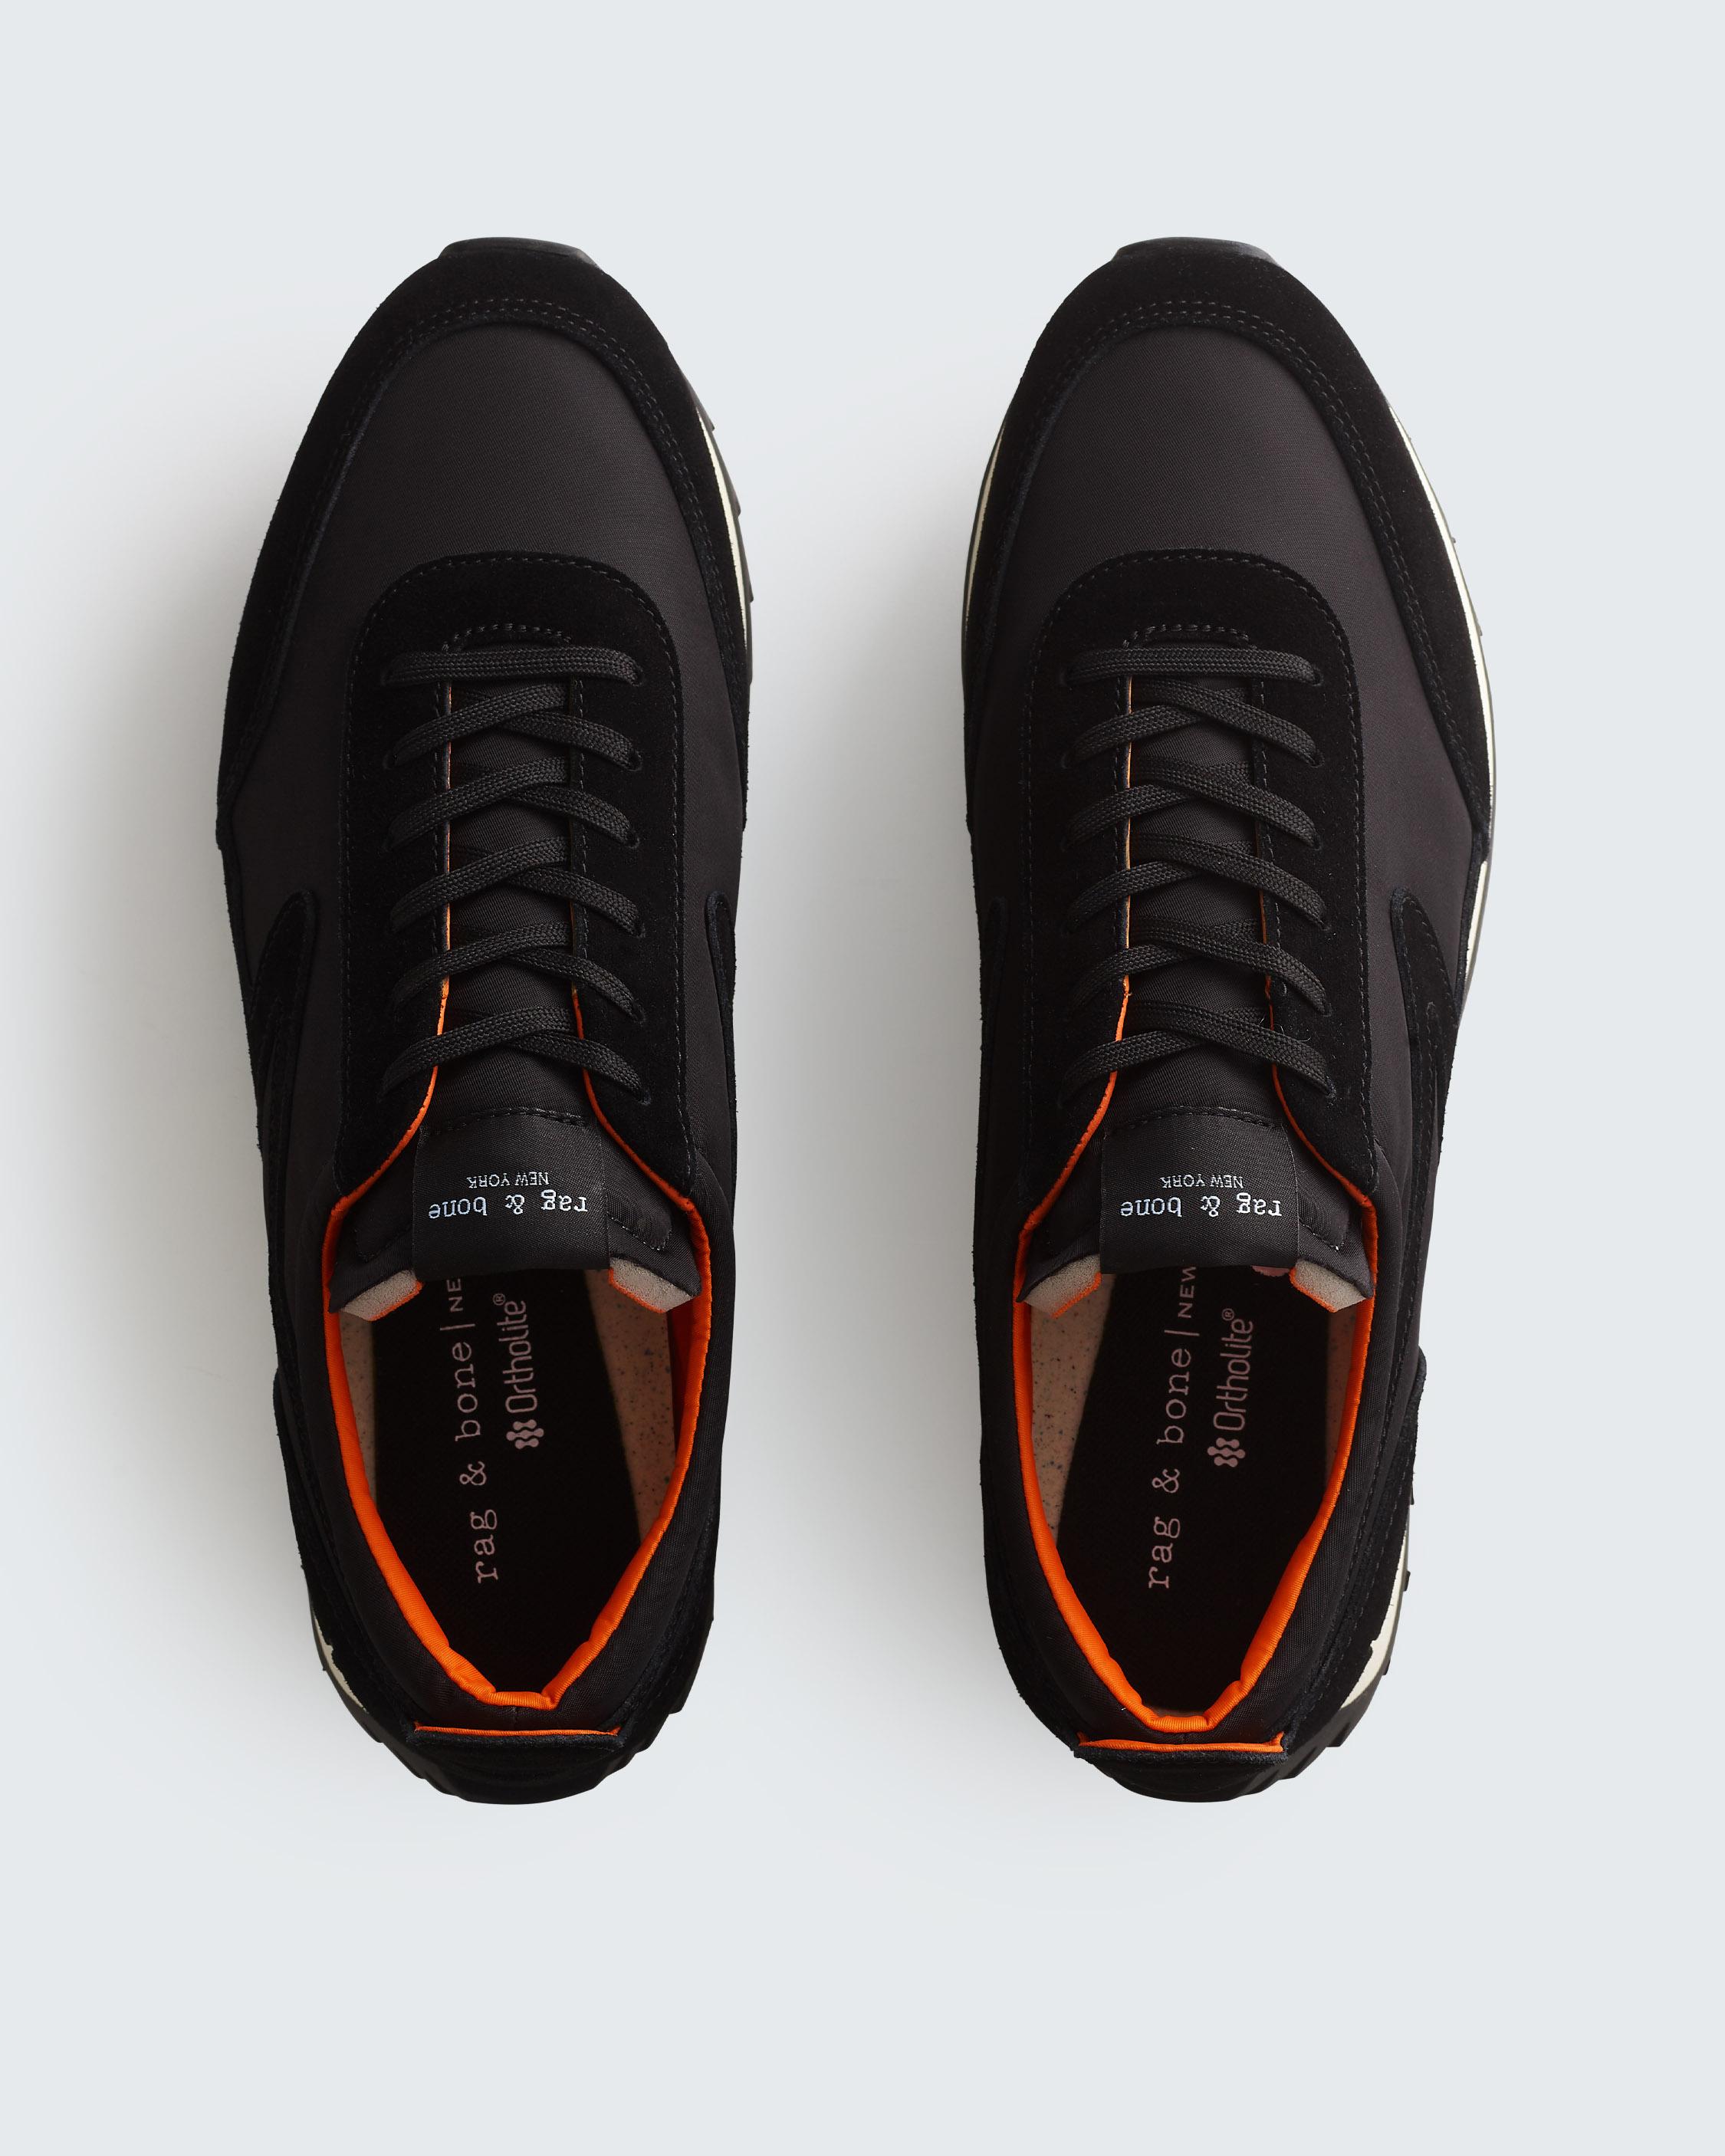 Men's Sneakers: Urban Inspired Athleisure Shoes | rag & bone